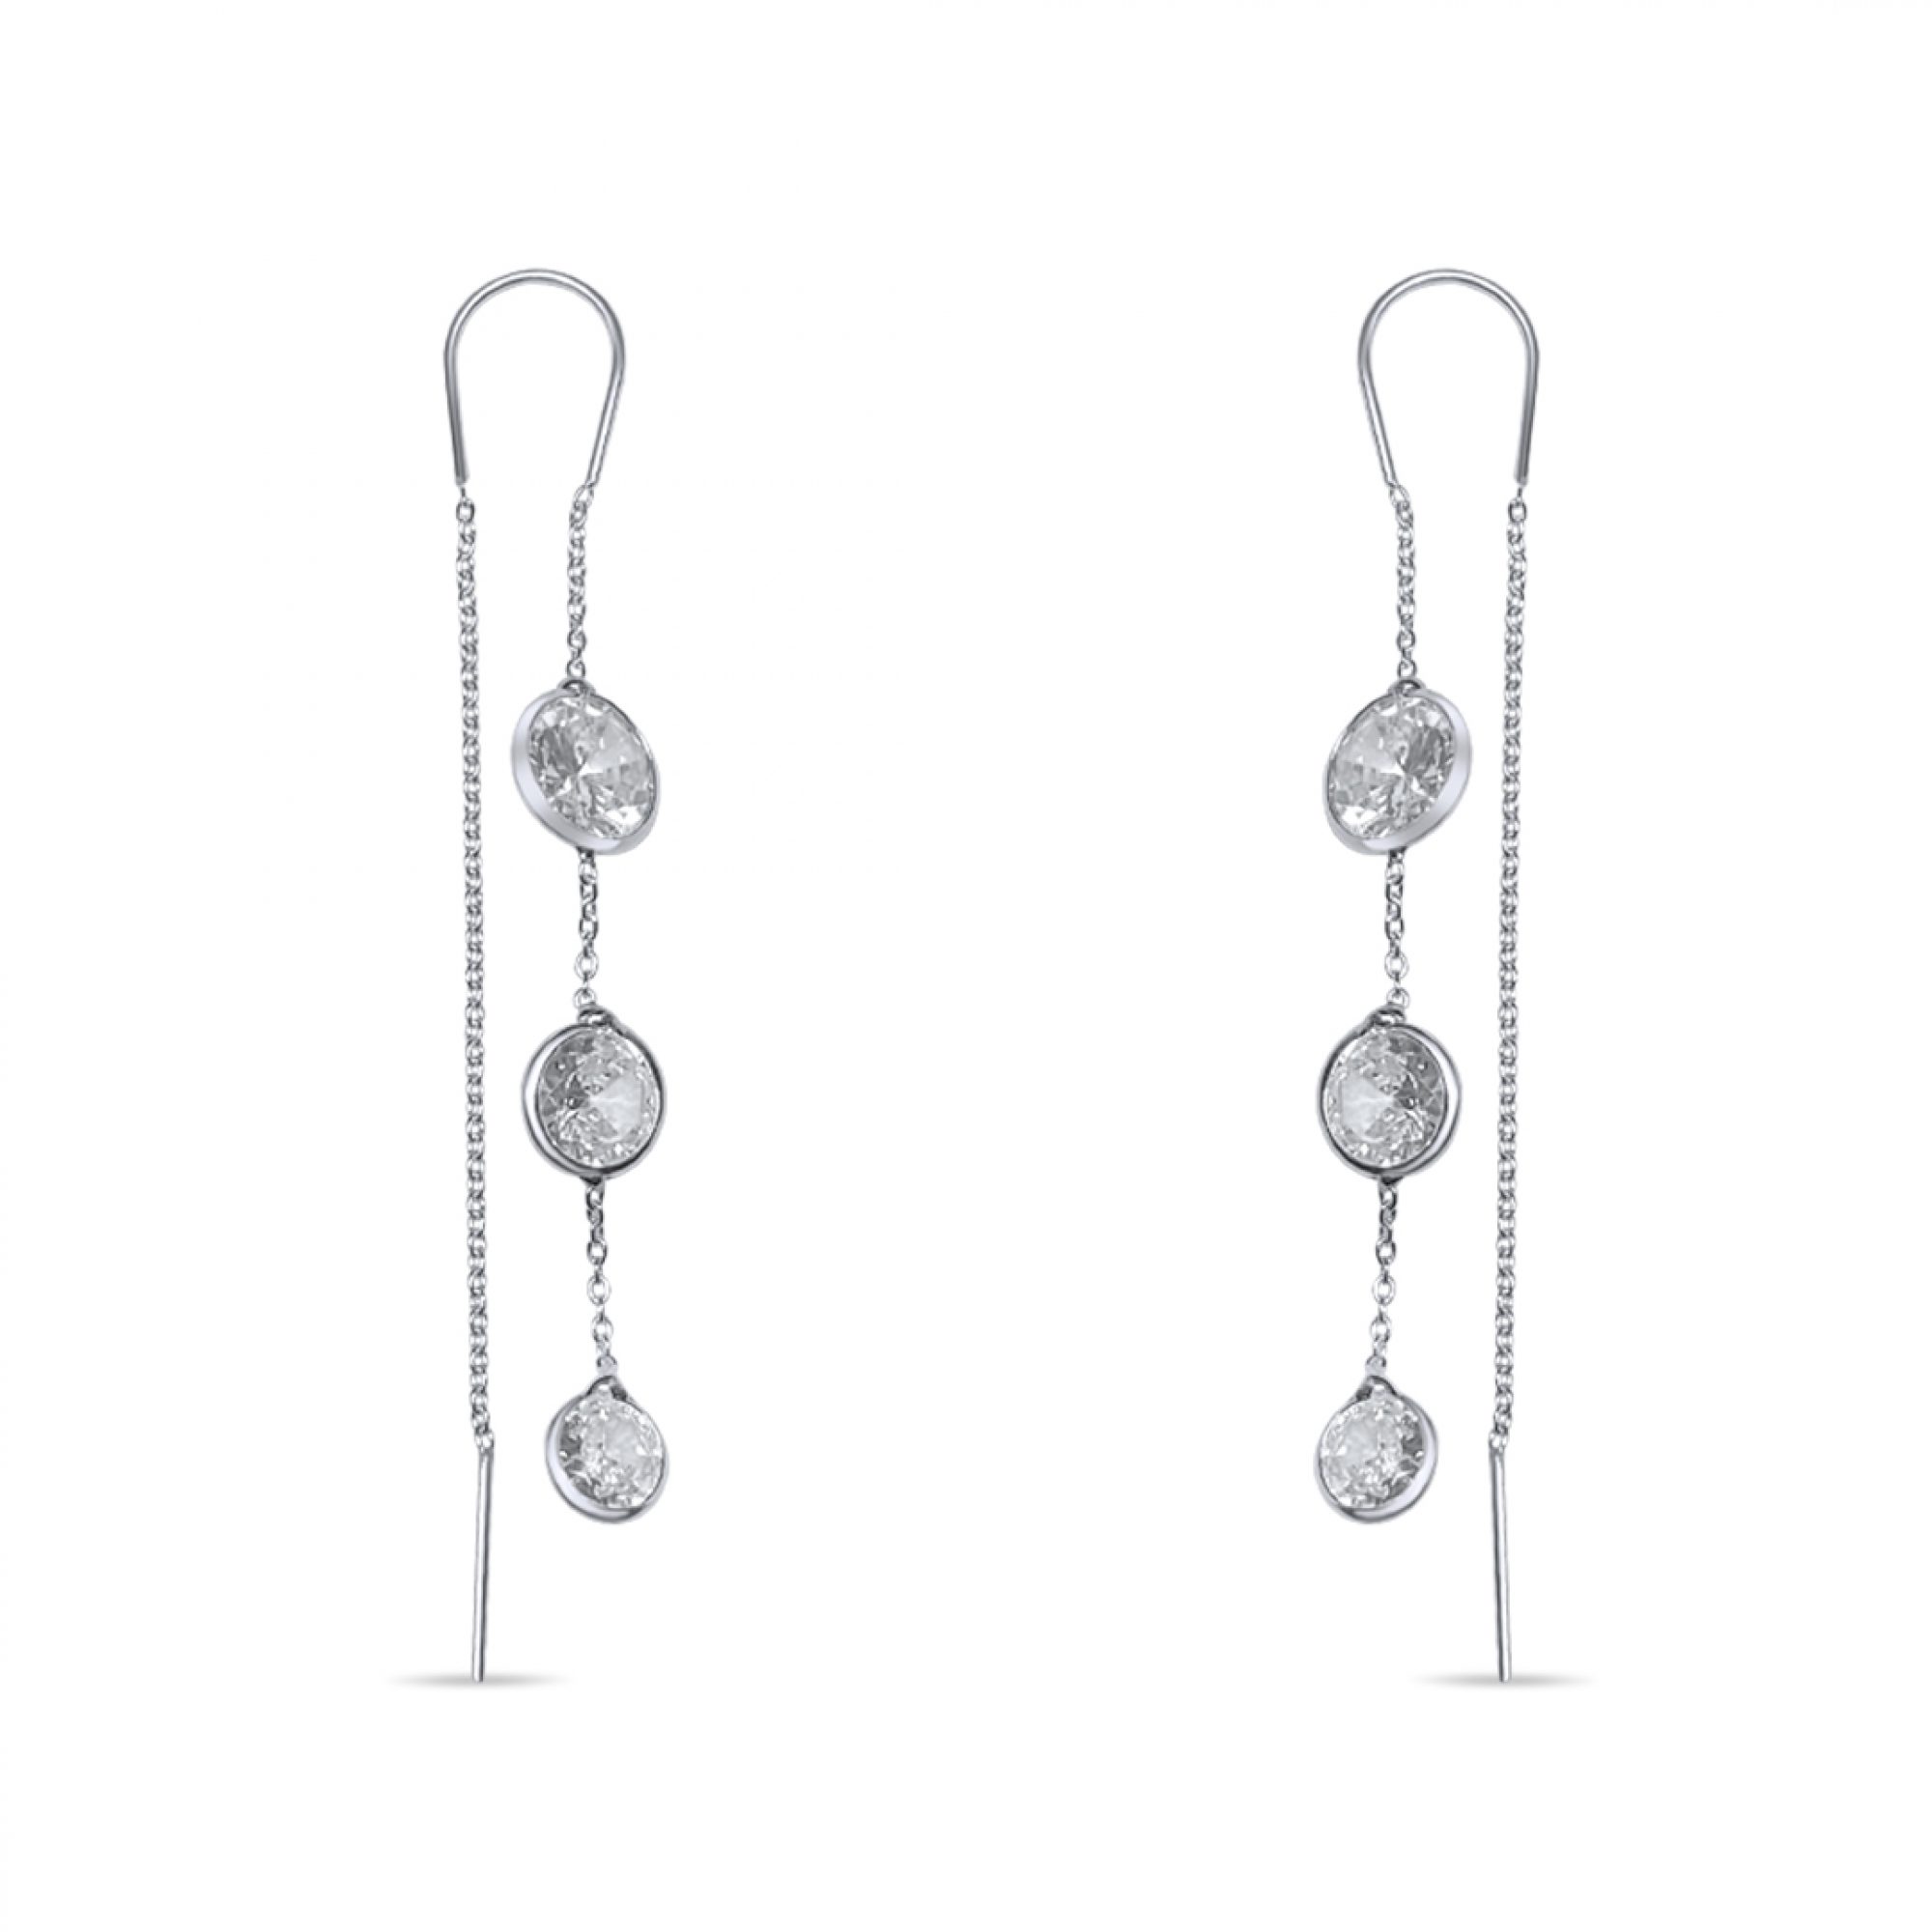 Chain earrings with zircon stones